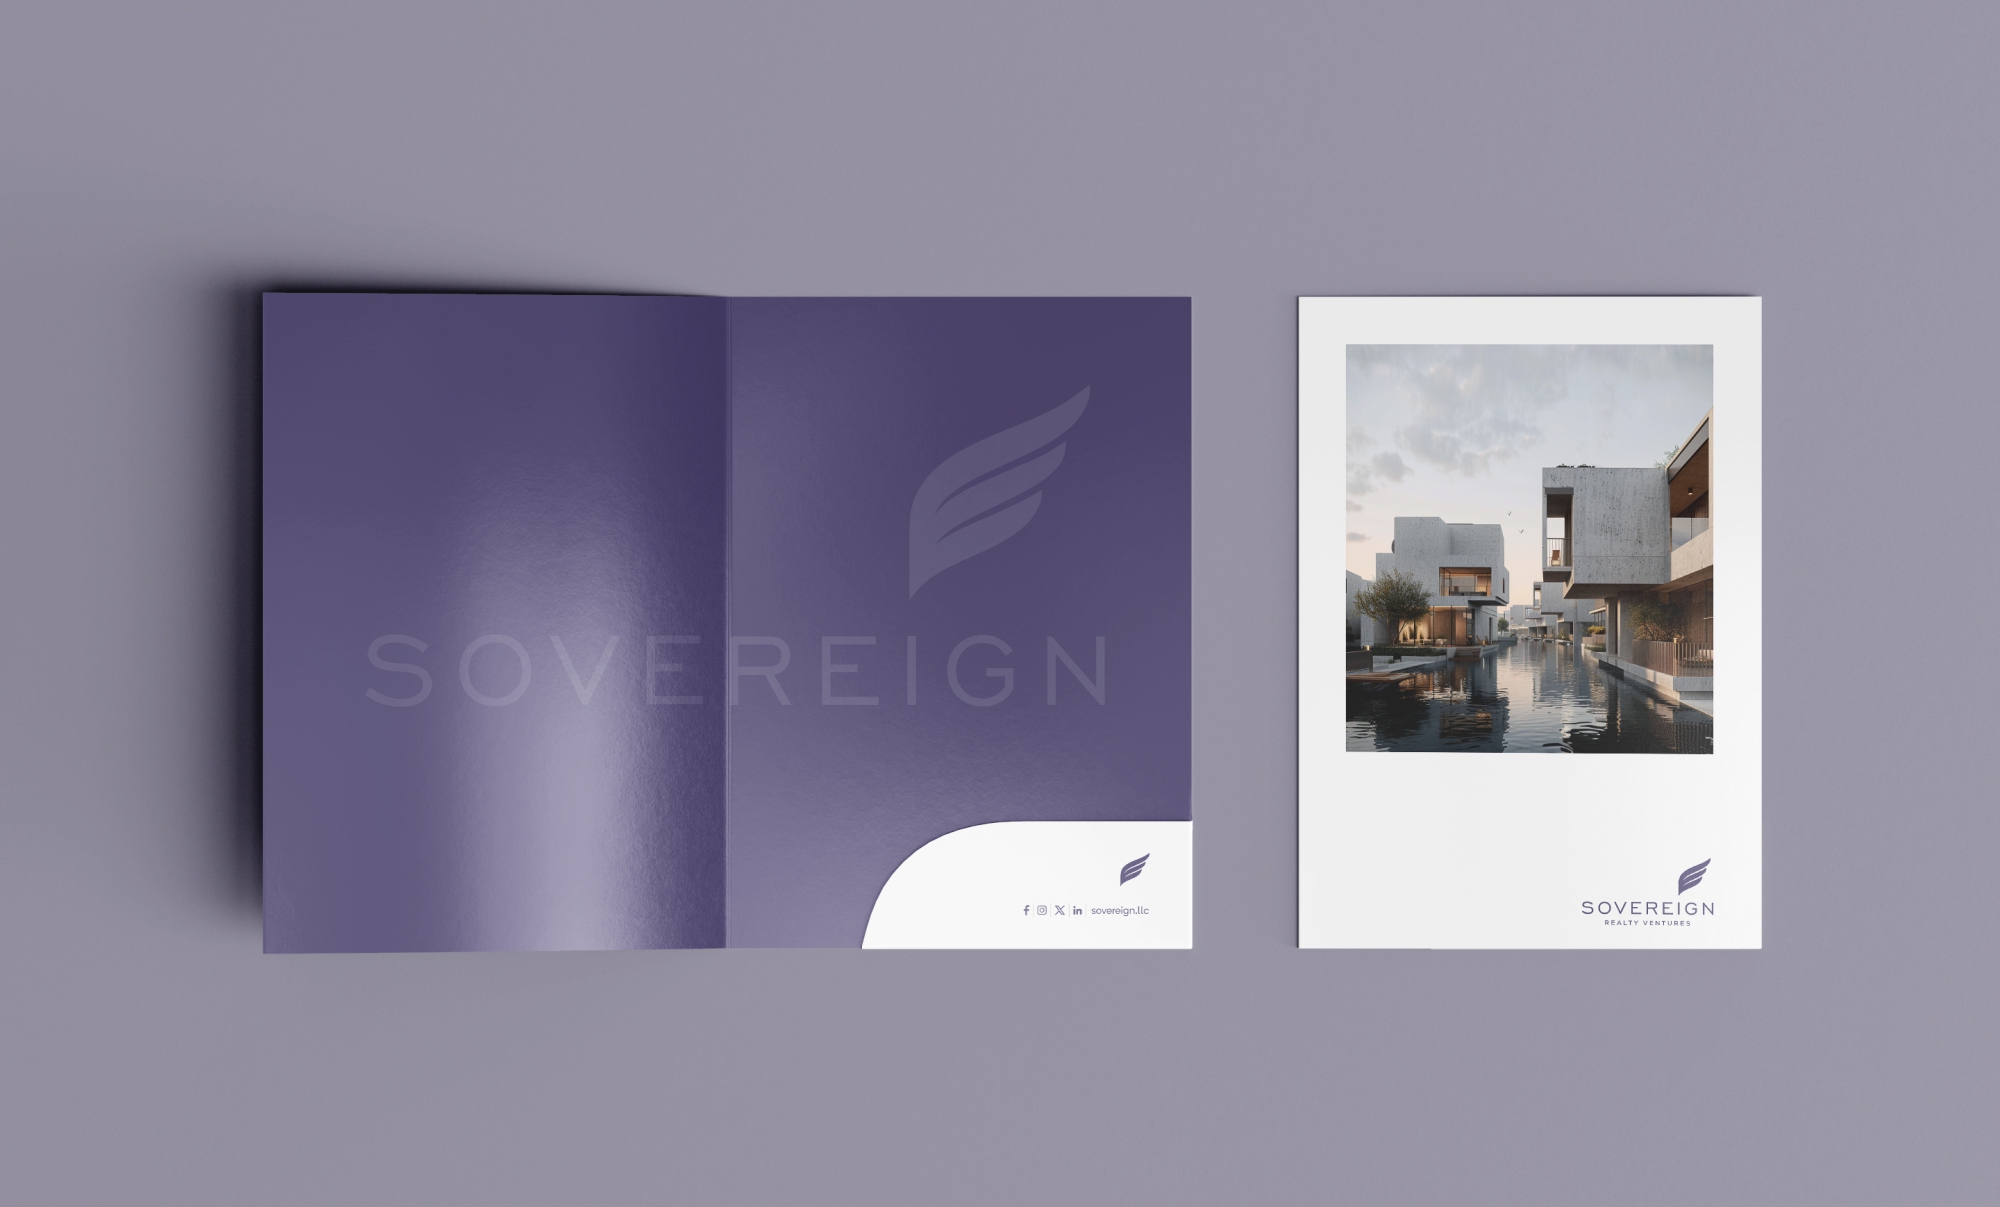 Sovereign-4